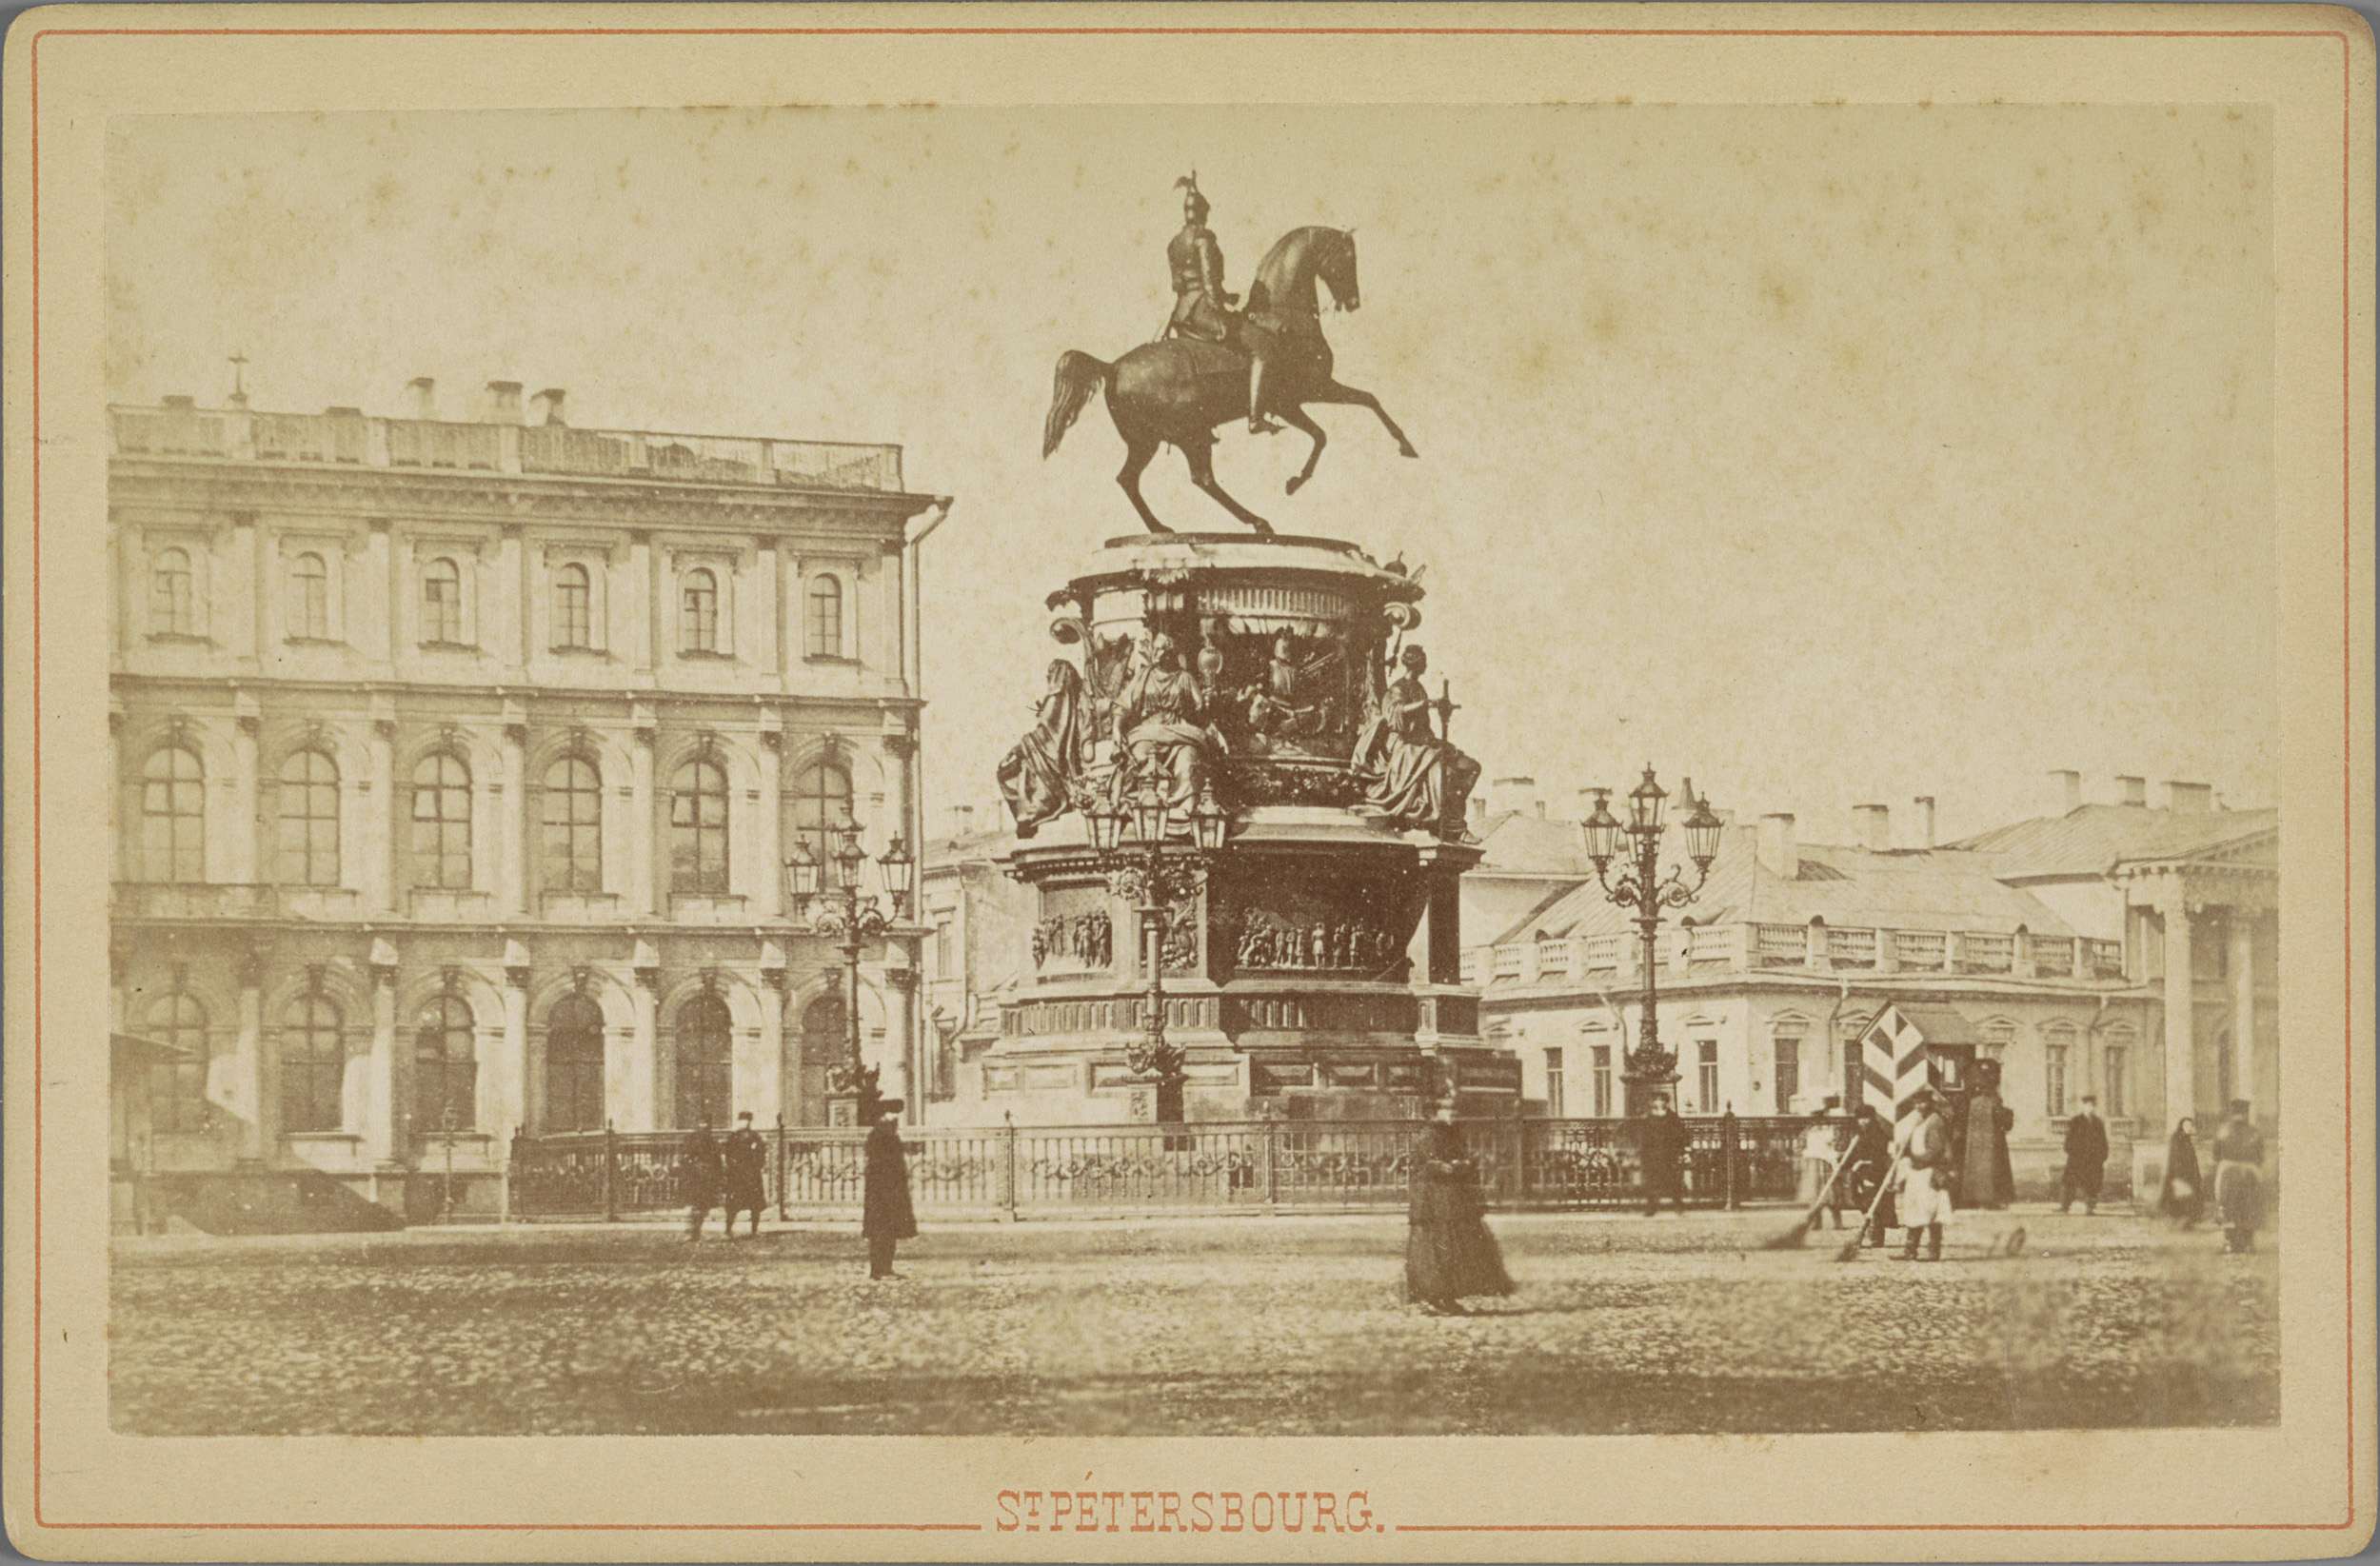 St. Petersbourg., Ruiterstandbeeld van tsaar Nicolaas I in Sint Petersburg